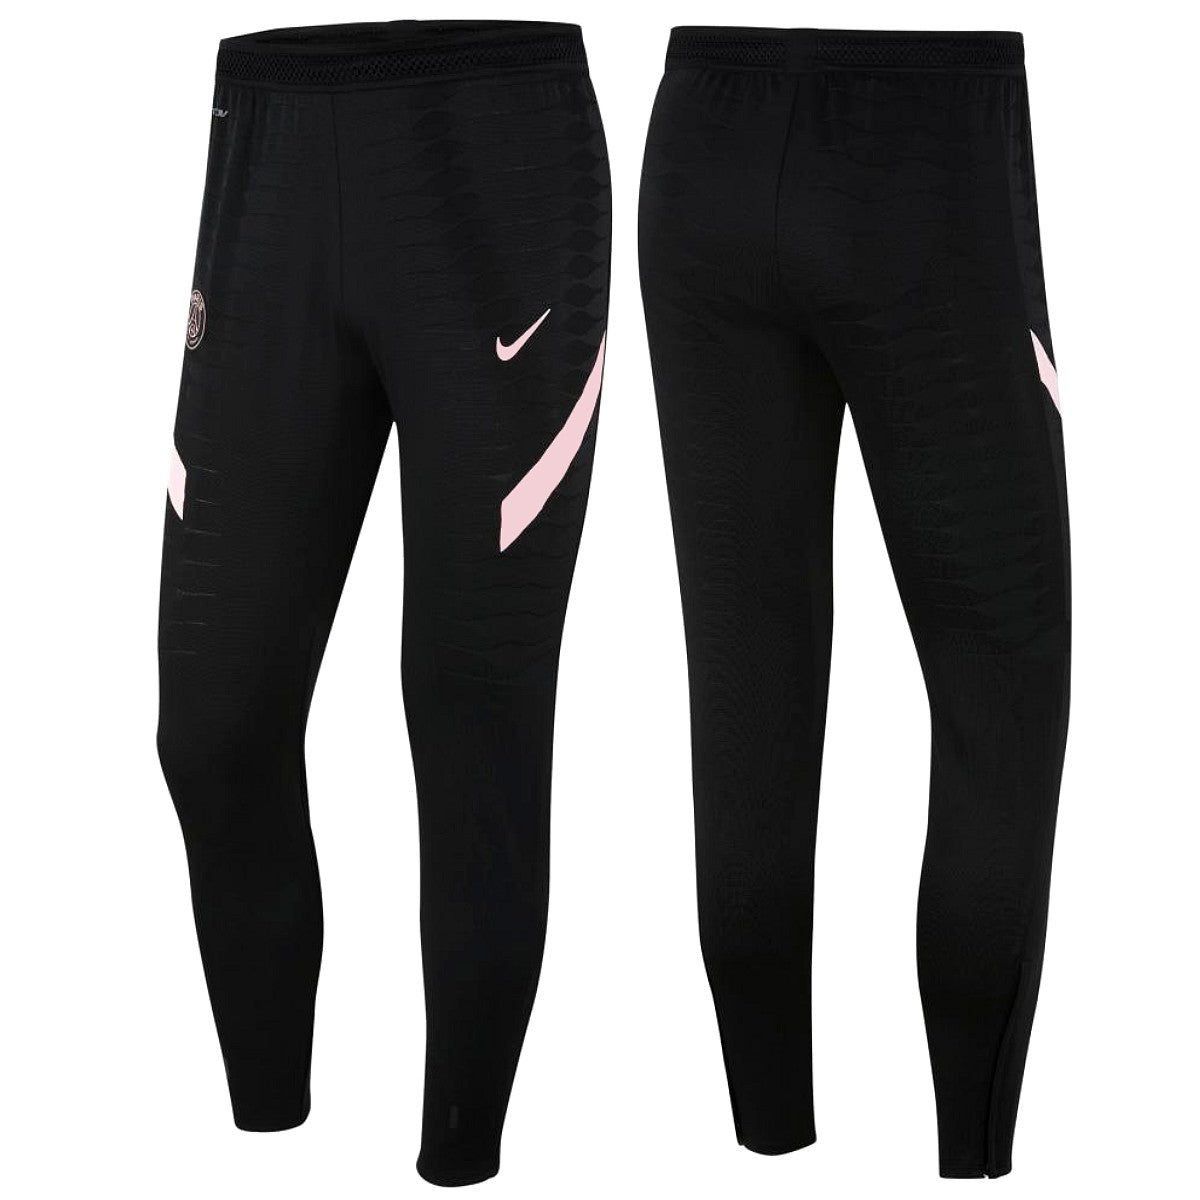 Paris Saint Germain Vaporknit training technical pants 2021/22 Nike SoccerTracksuits.com